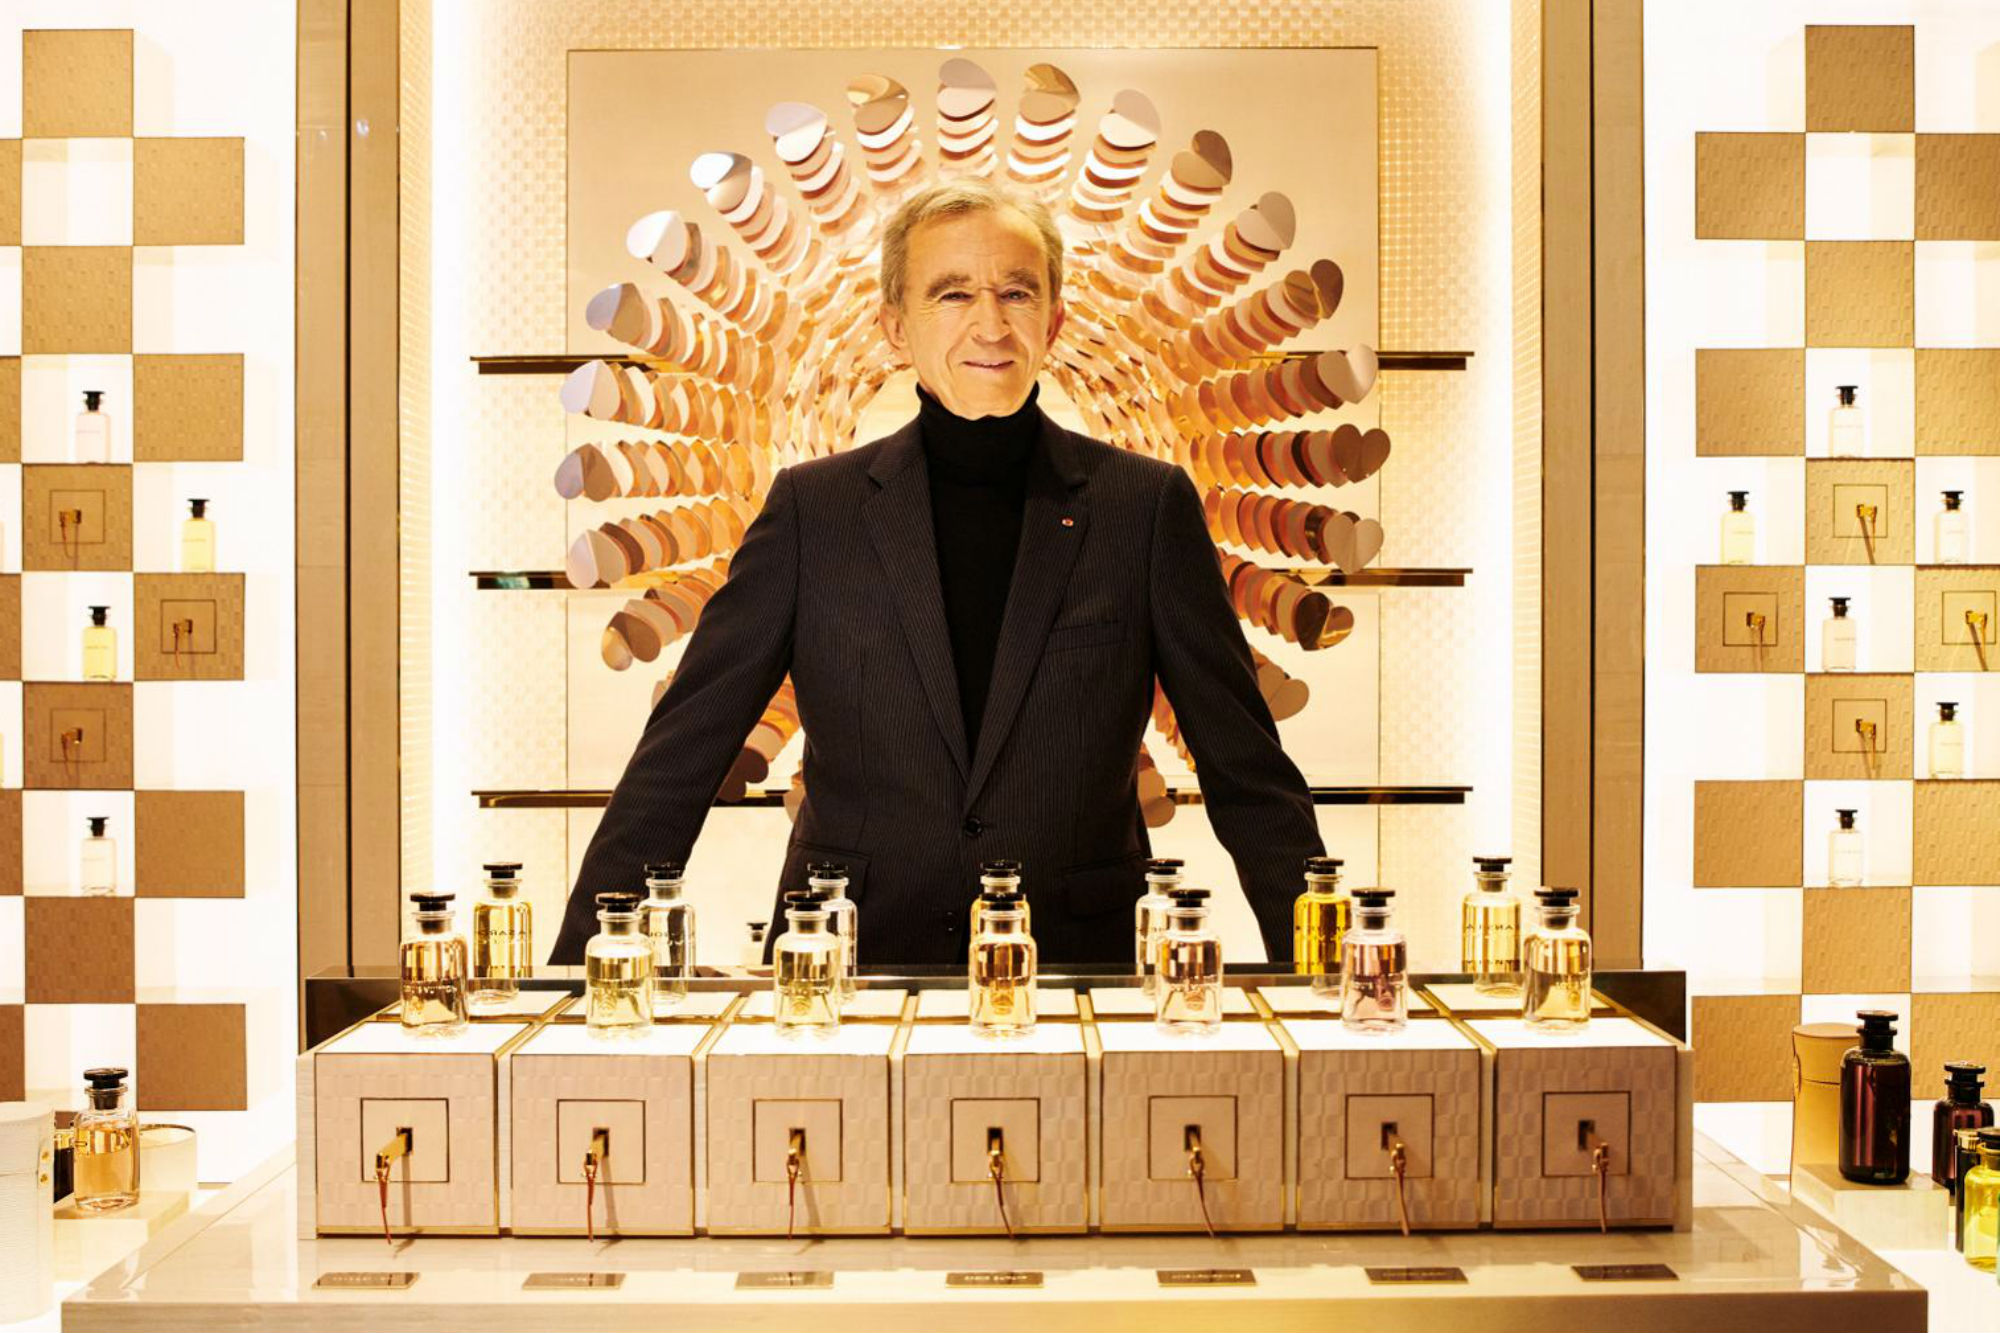 Dono da Louis Vuitton e terceiro mais rico do mundo: conheça